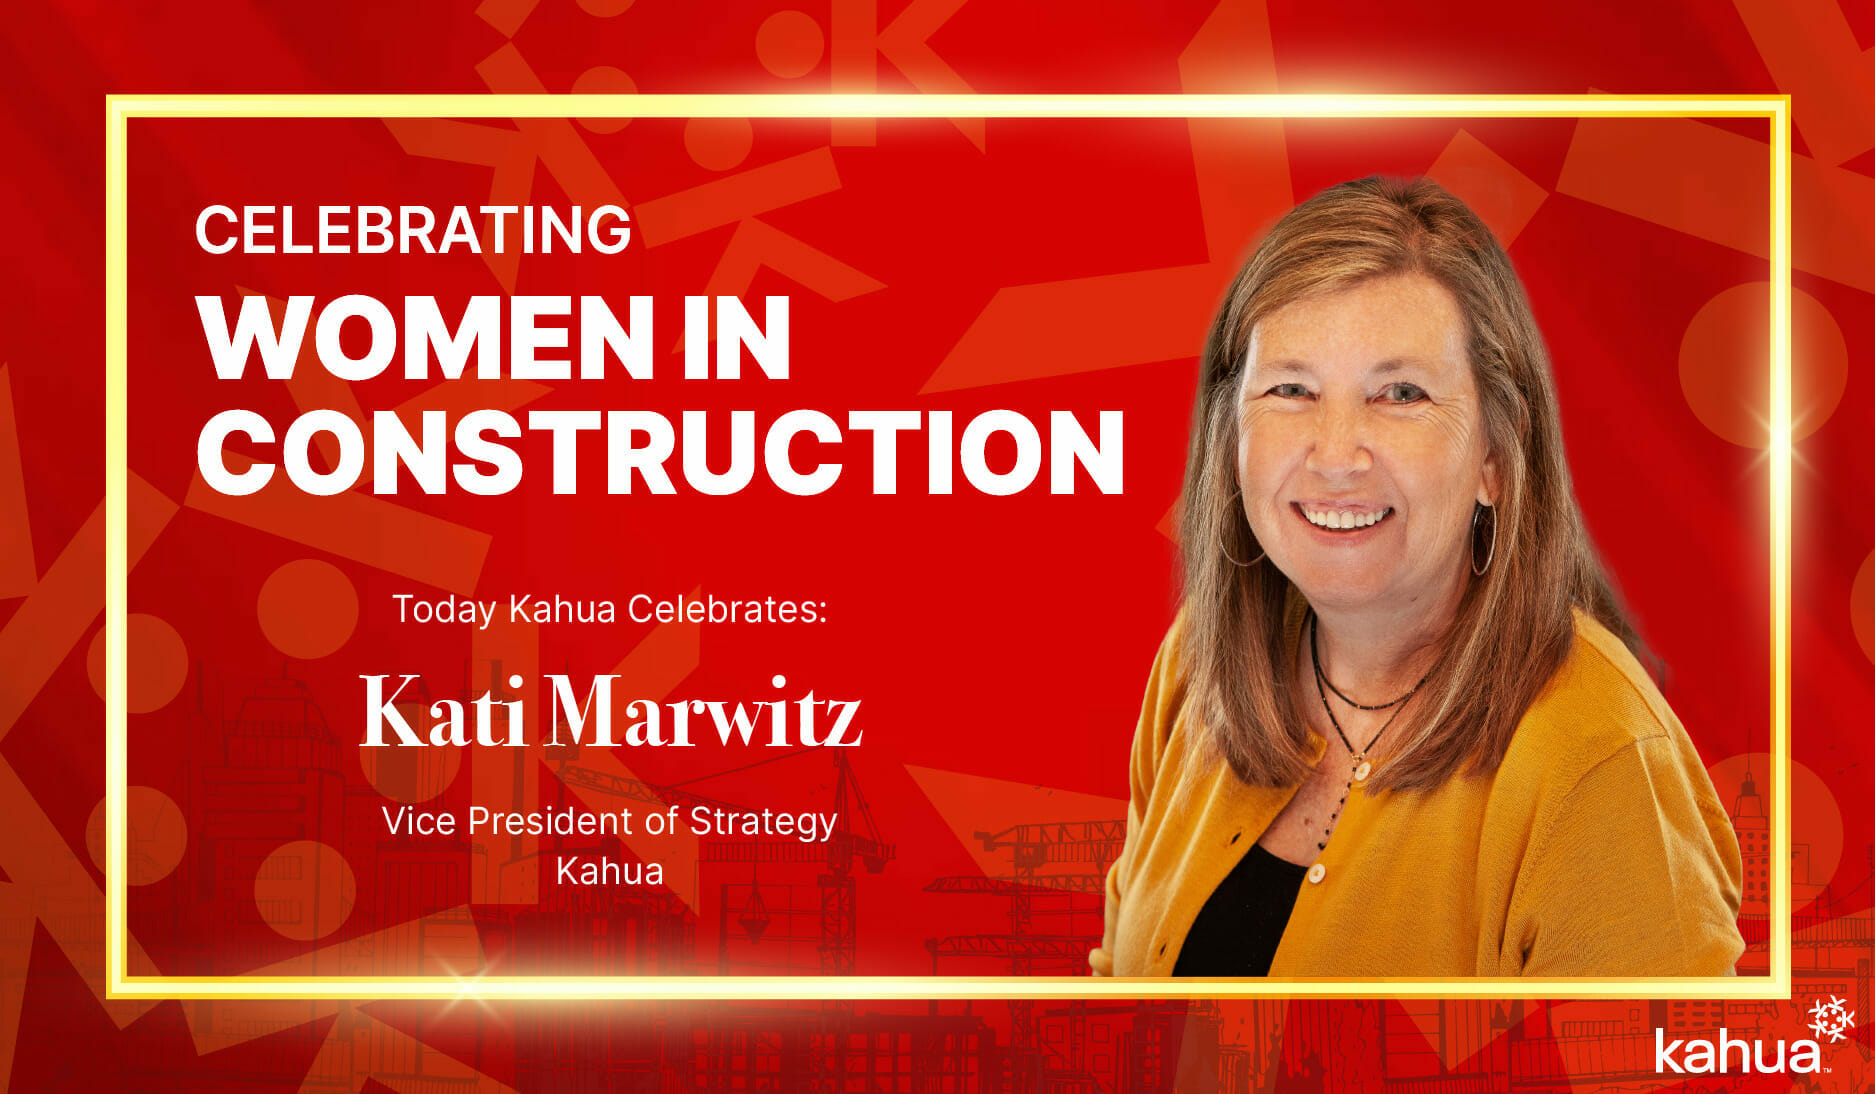 Women in Construction - Kati